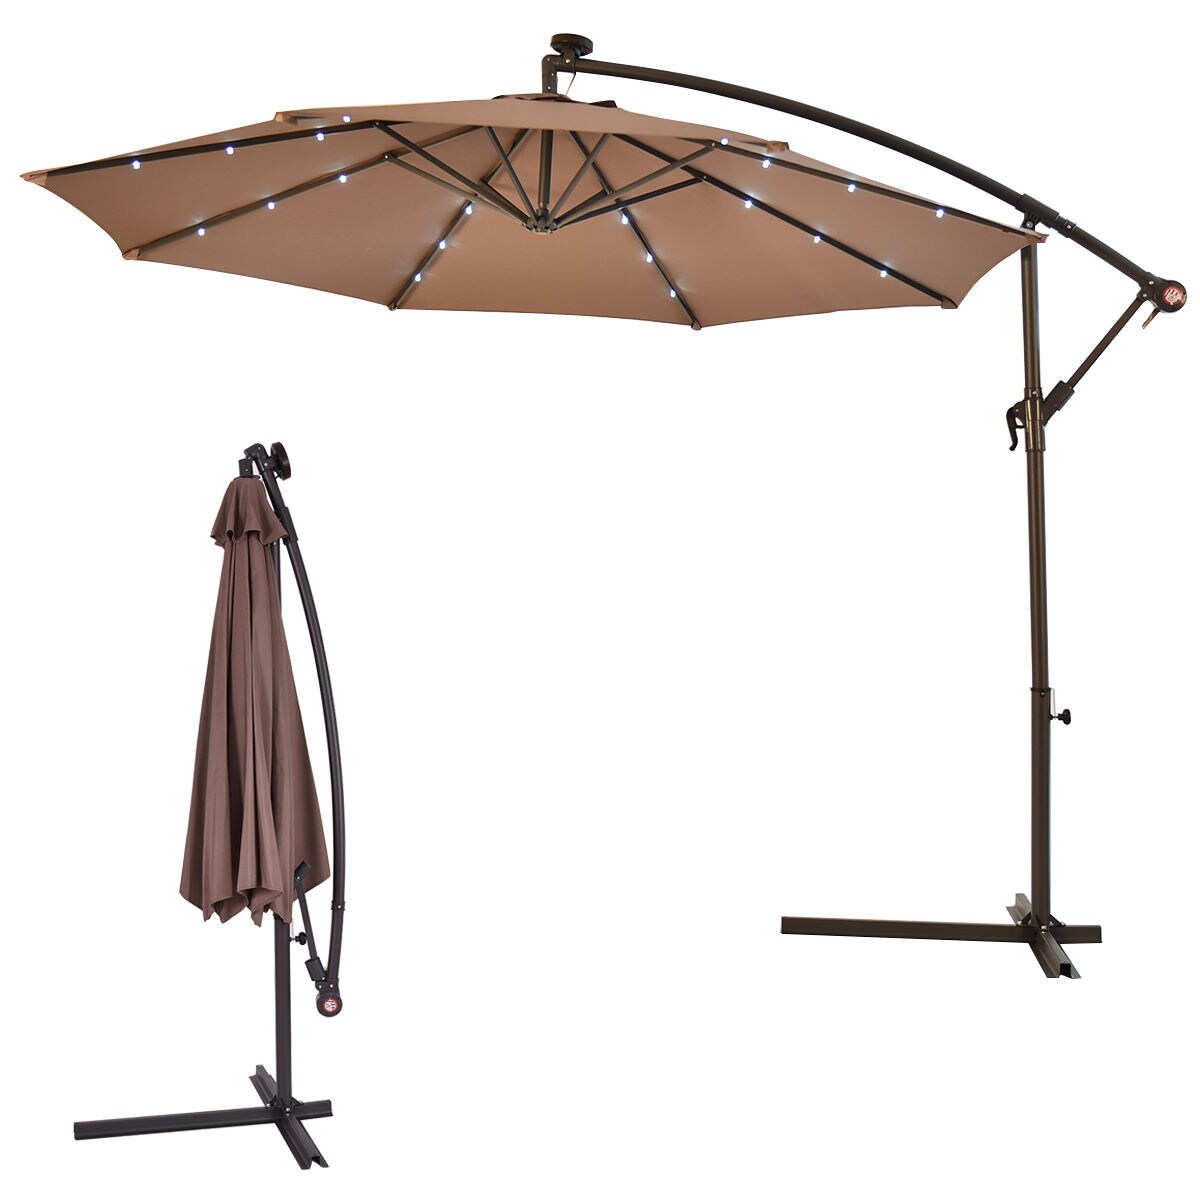 10' Hanging Solar LED Umbrella Patio Sun Shade Offset Market W/Base Tan for sale online 